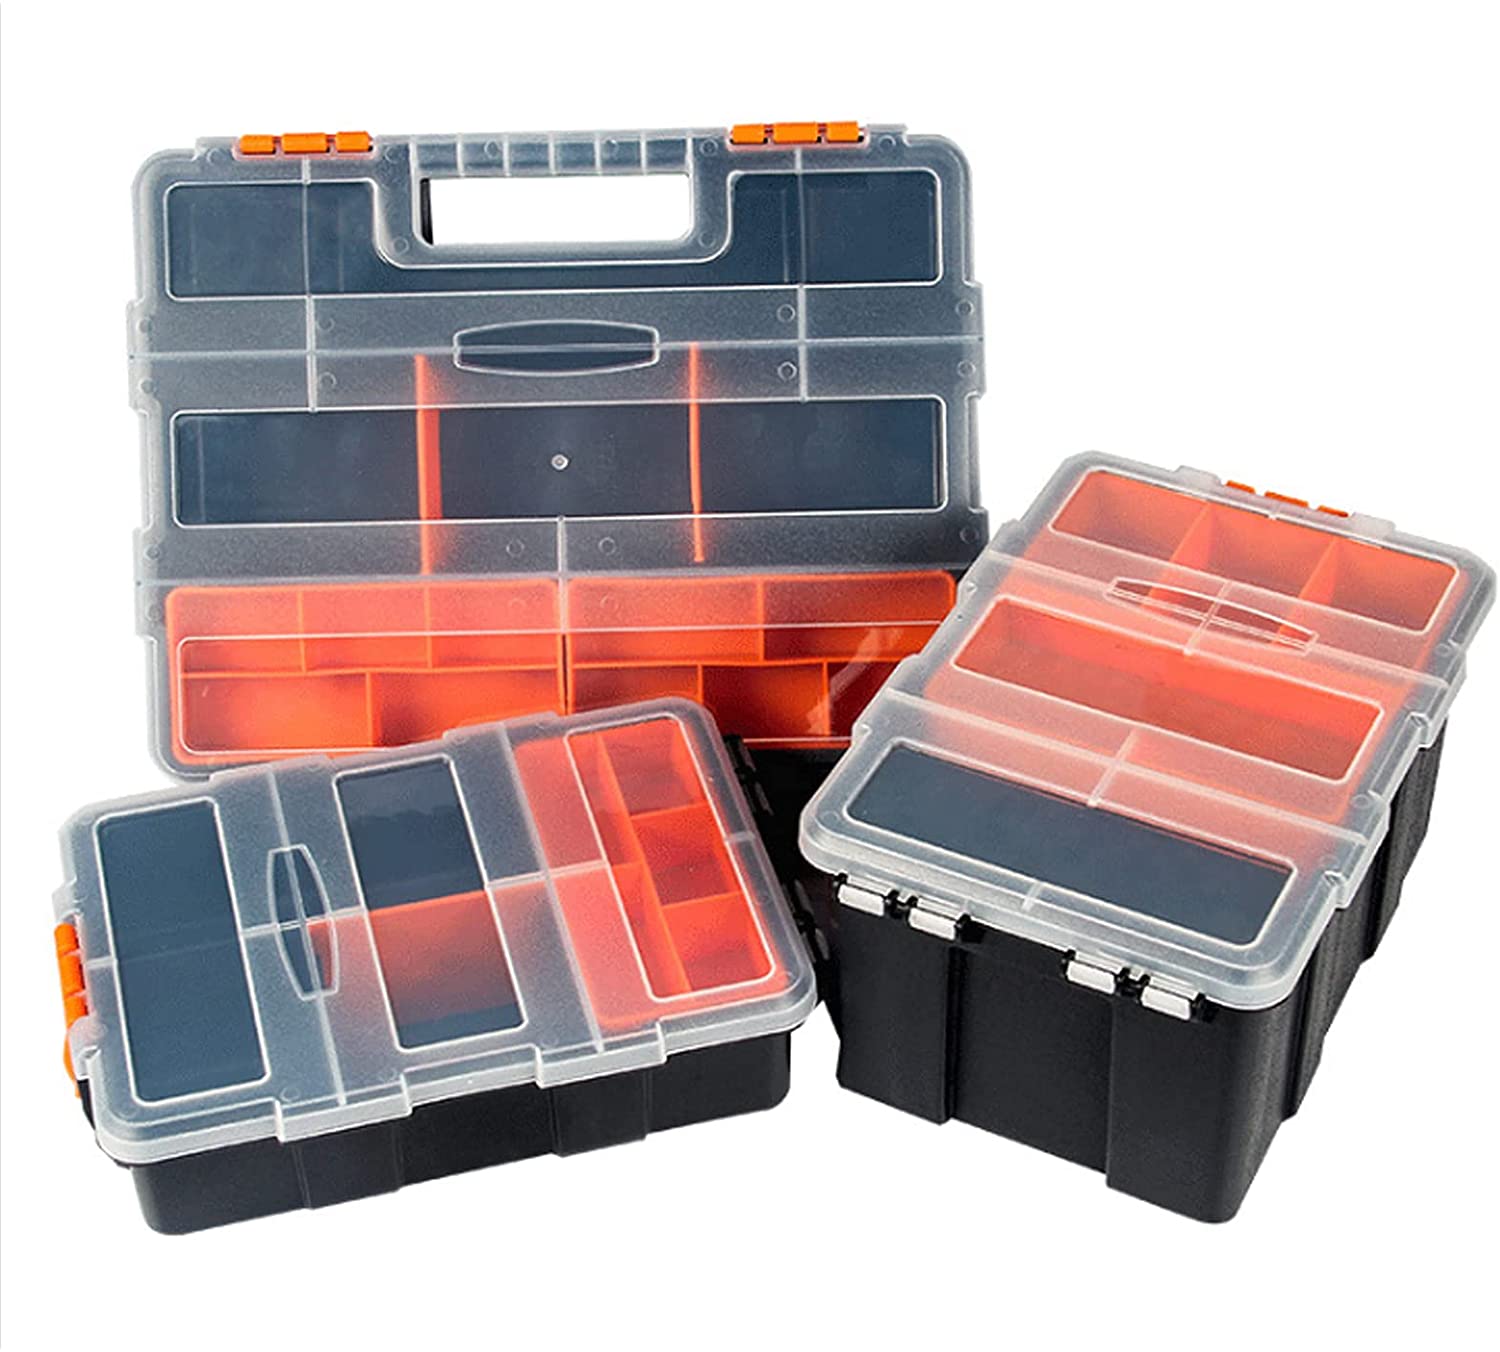 Bangrui 4Pc Hardware and Small Parts Organizer Box Set; Versatile